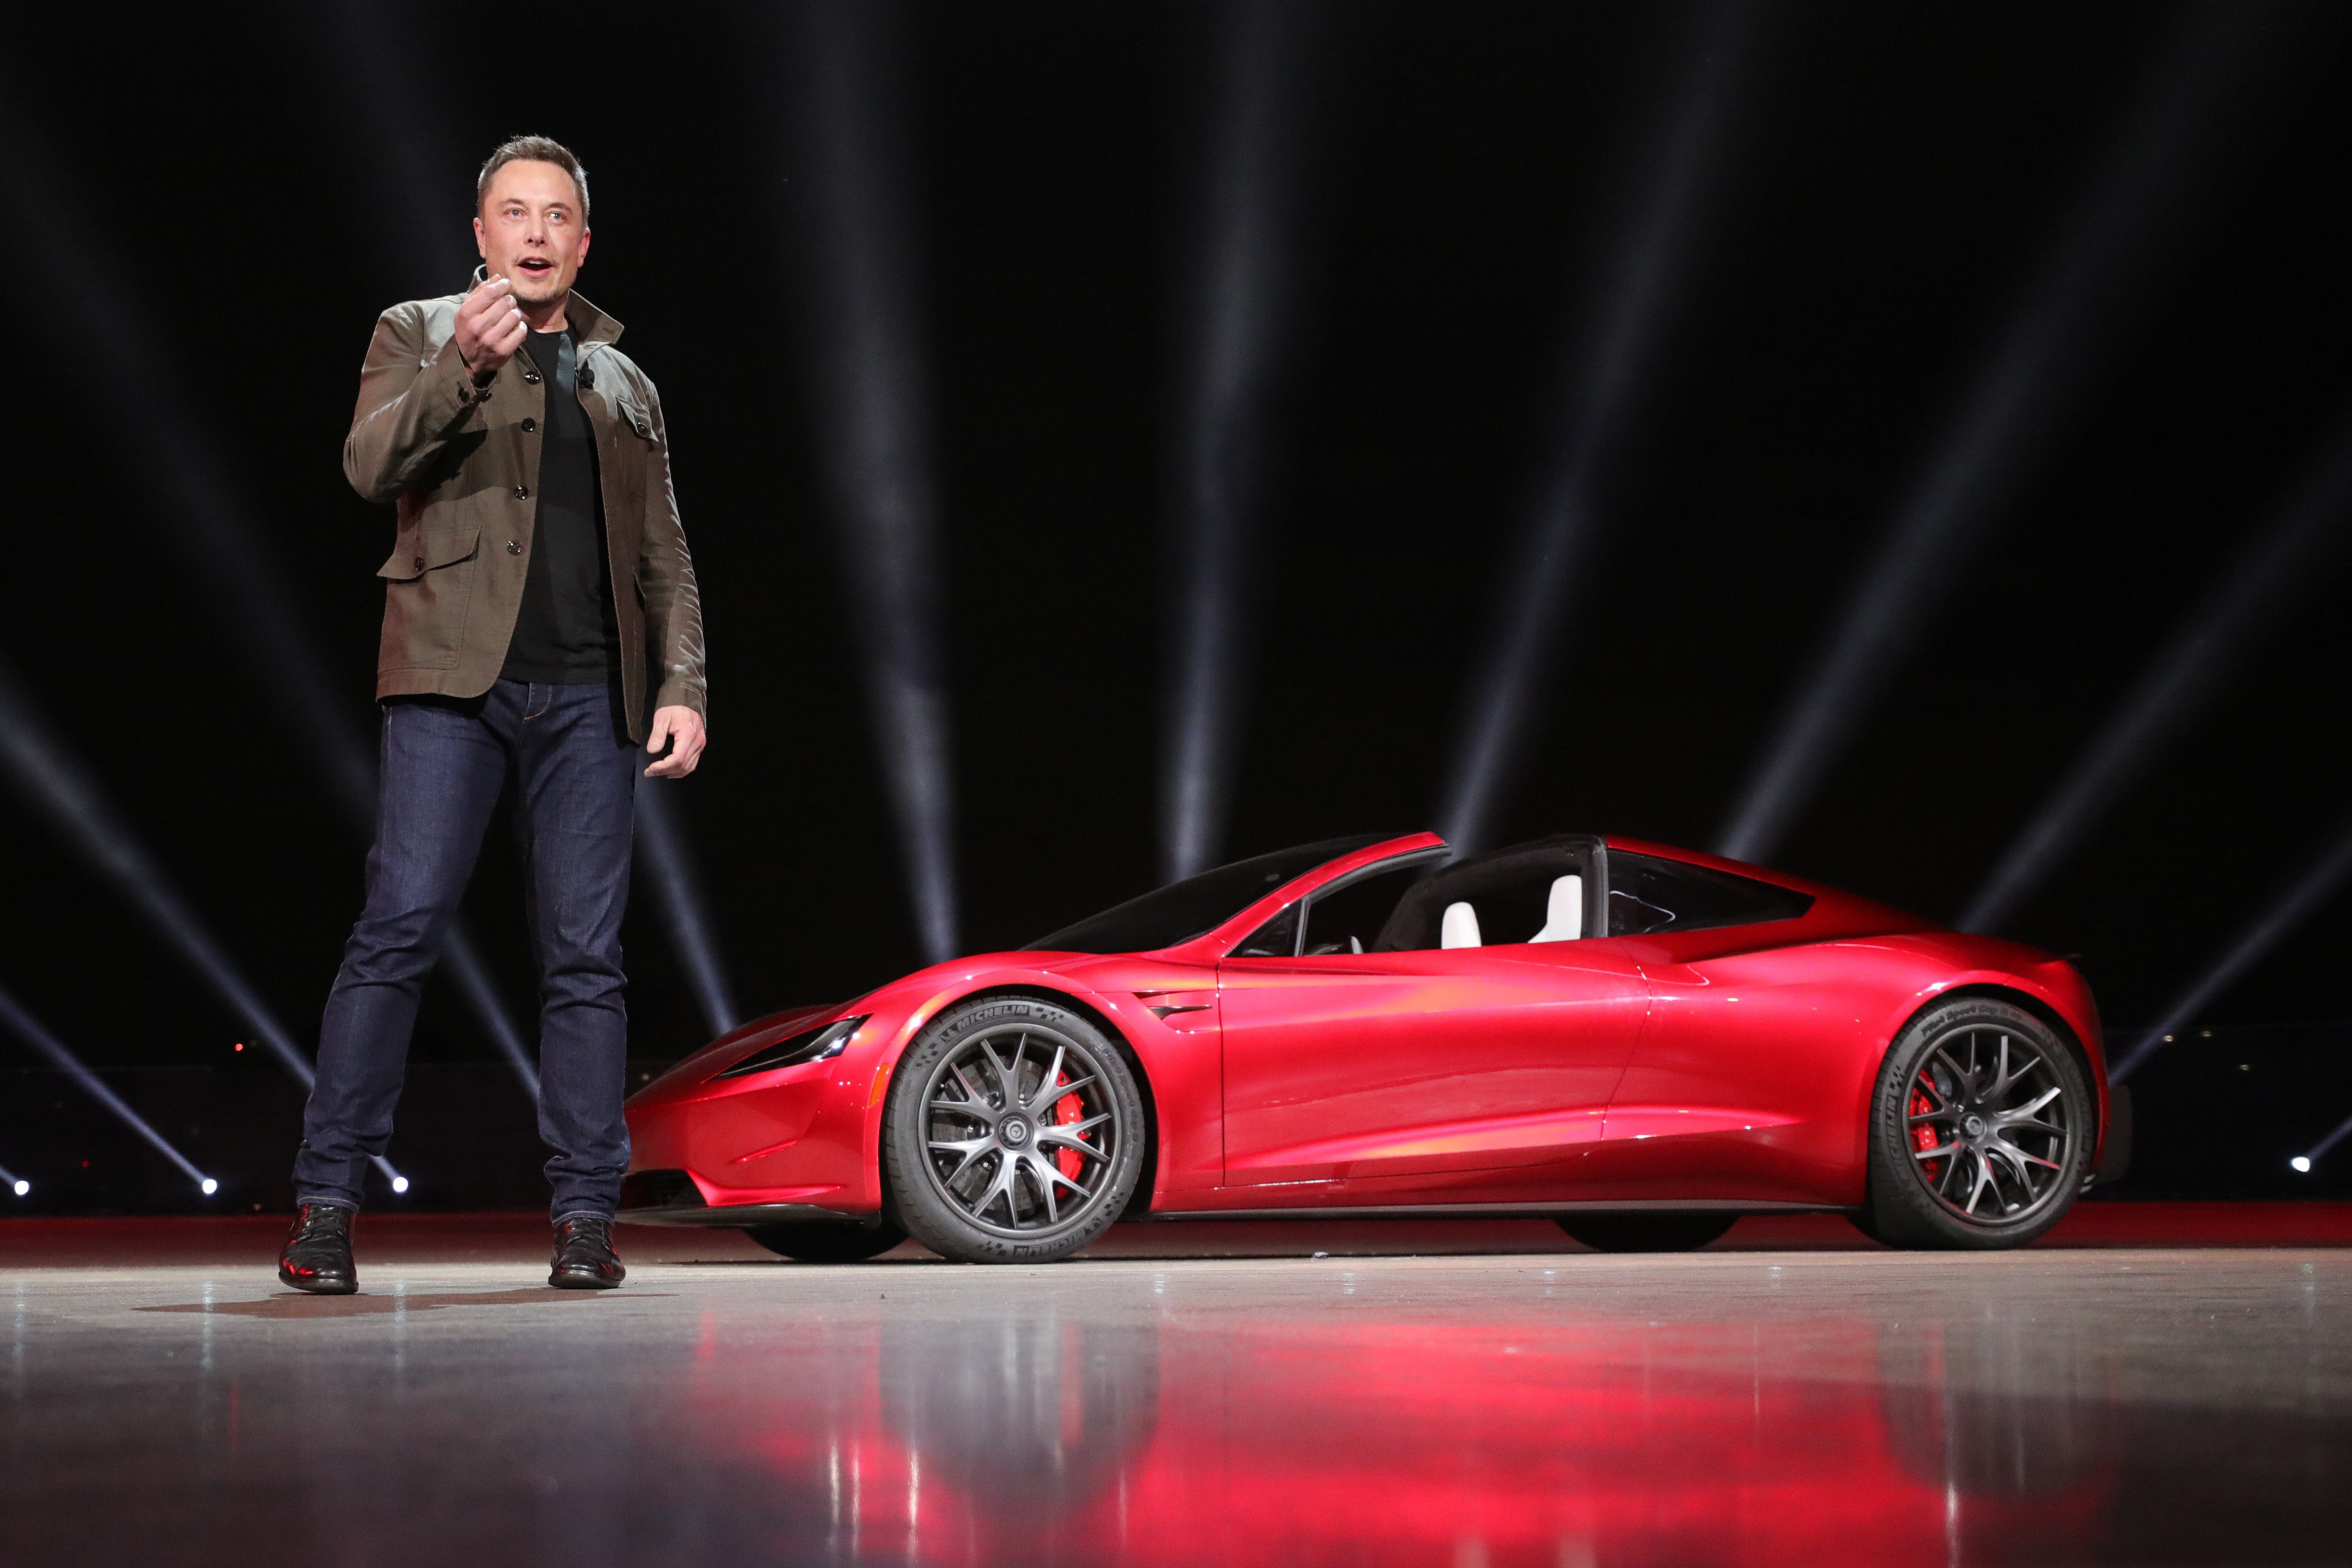 Elon Musk Says Tesla Stock Price Too High Criticizes Shutdowns